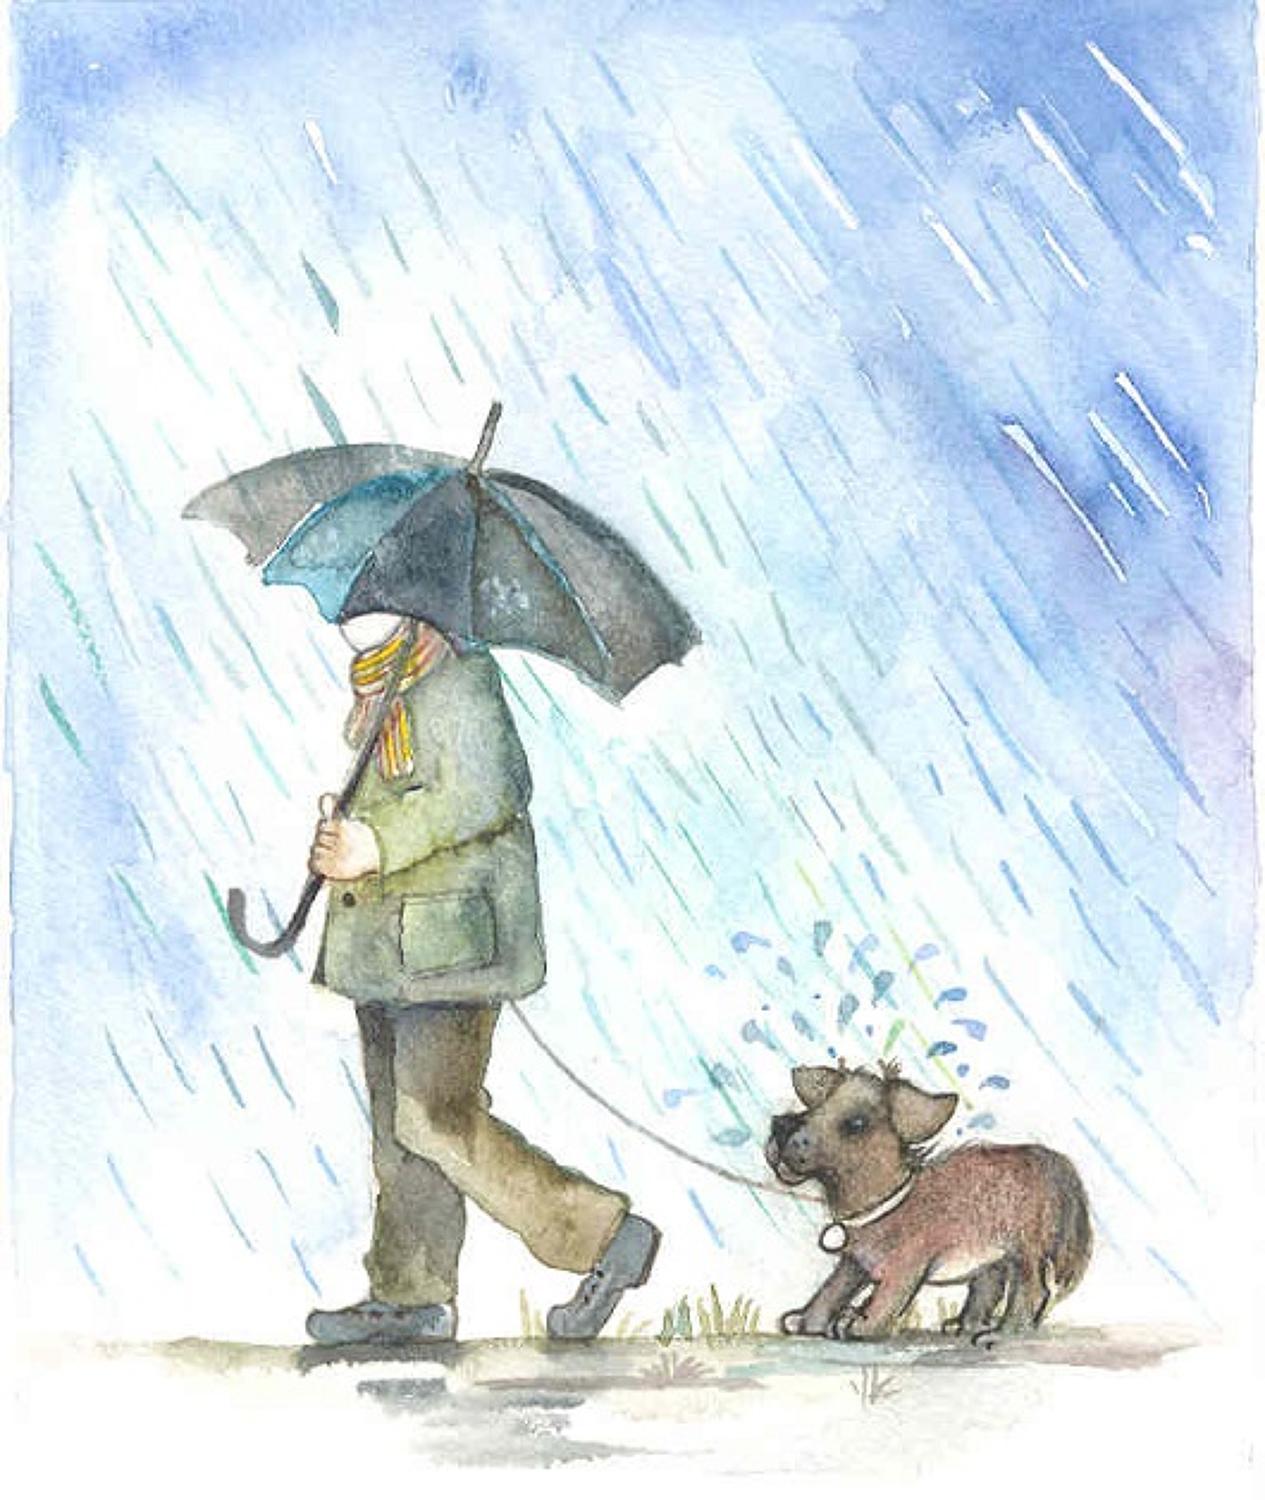 Walking the dog in the rain